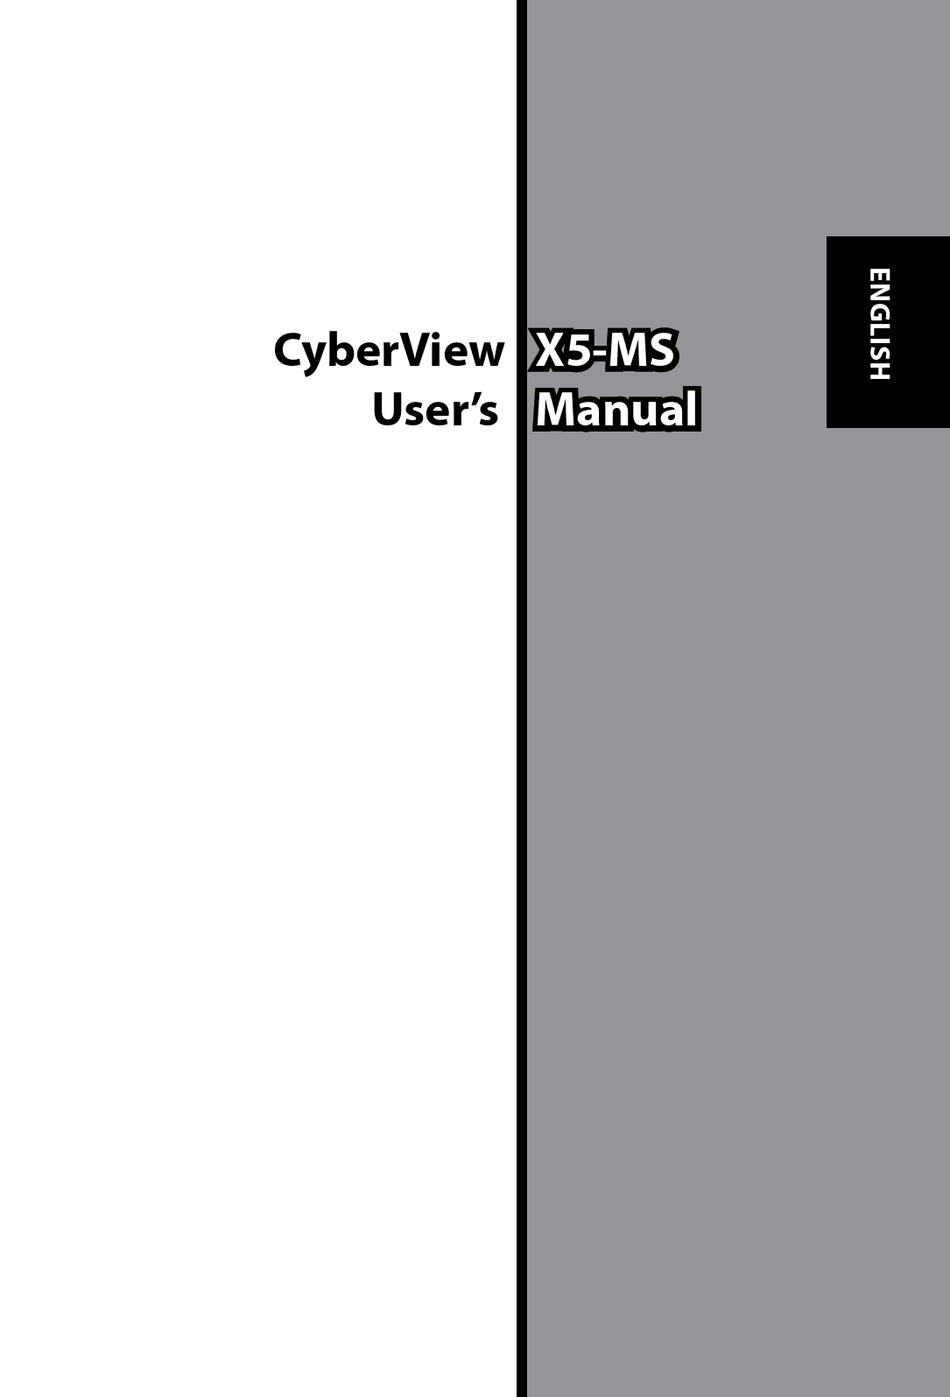 cyberview x5 download mac